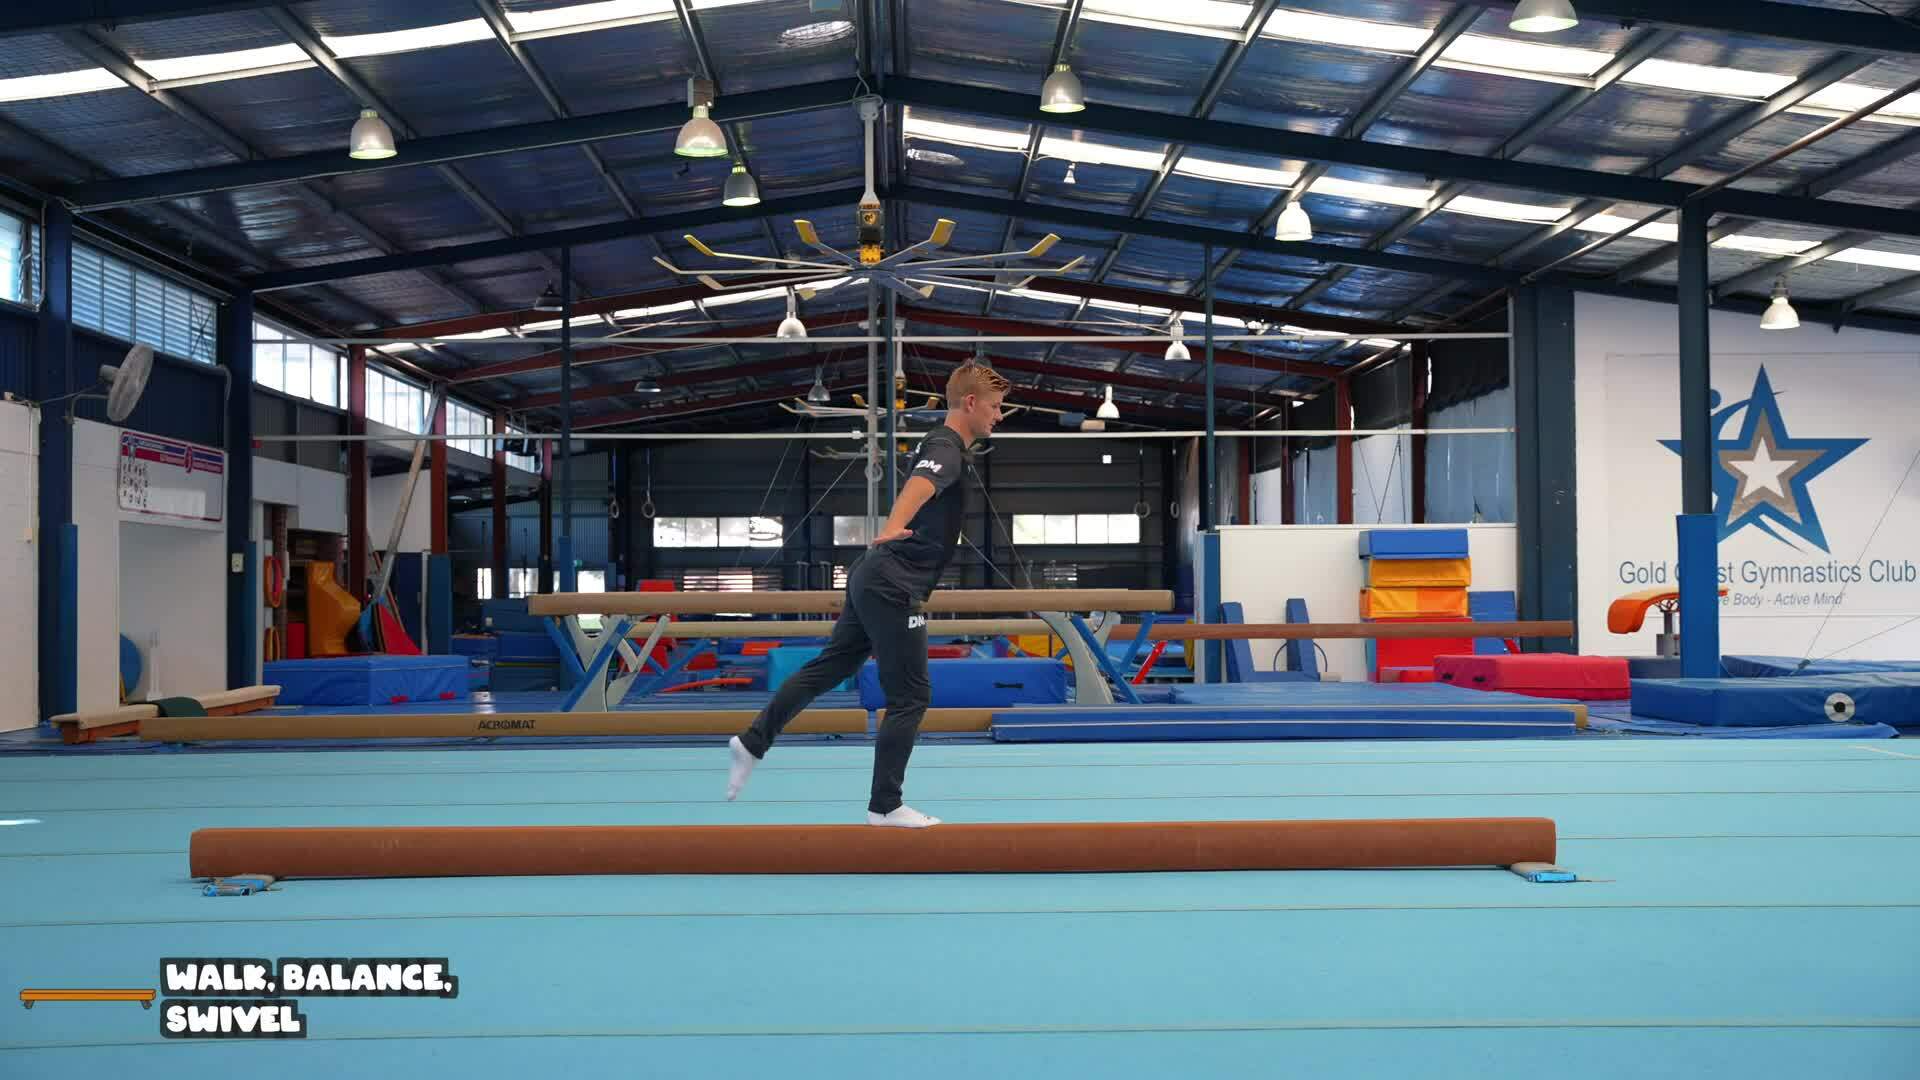 Elementary gymnastics - Beam - 5 walk - balance - swivel